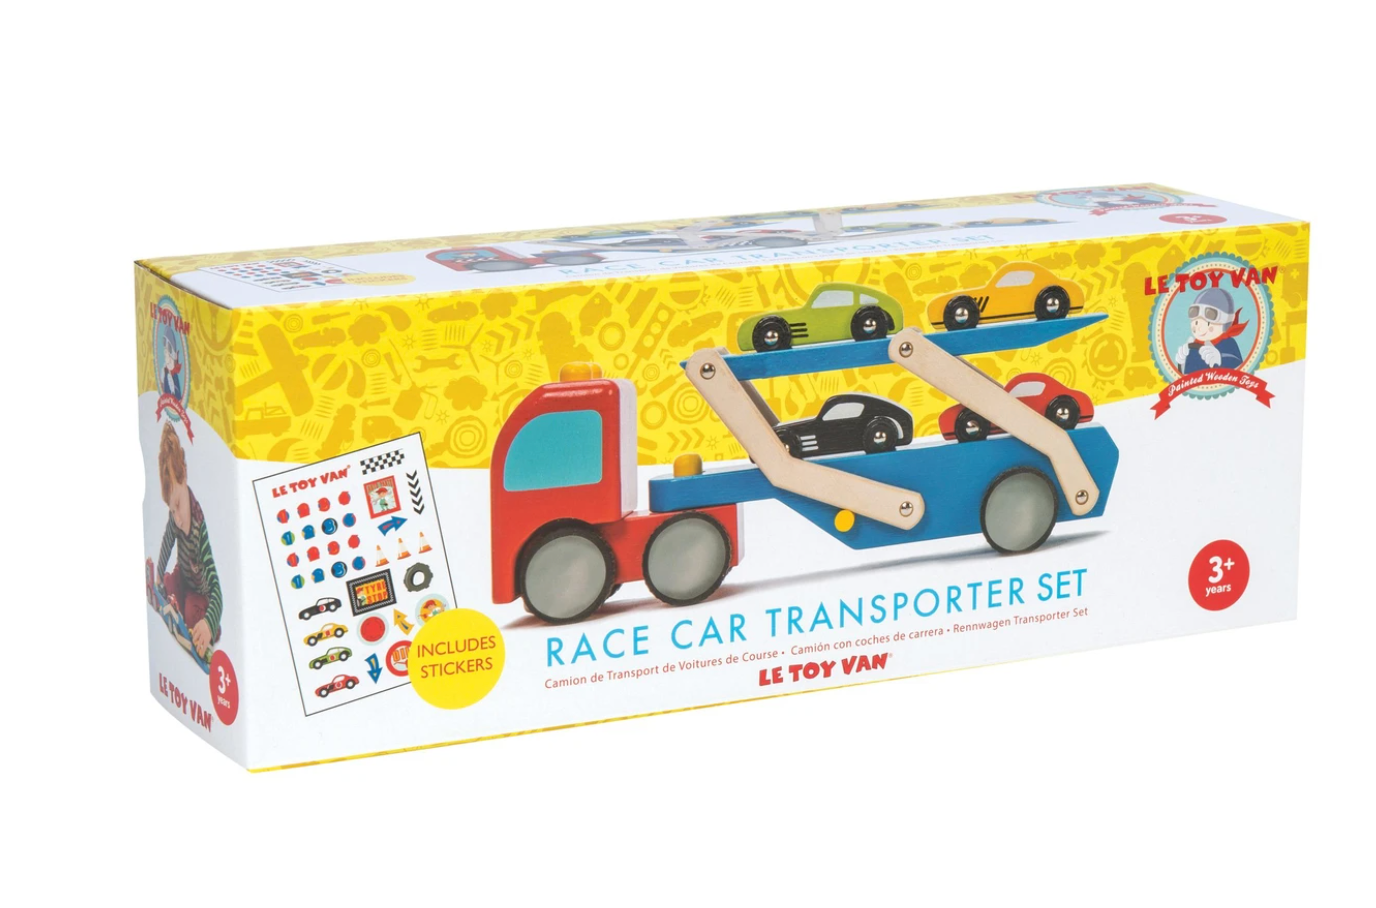 Race Car Transporter Set